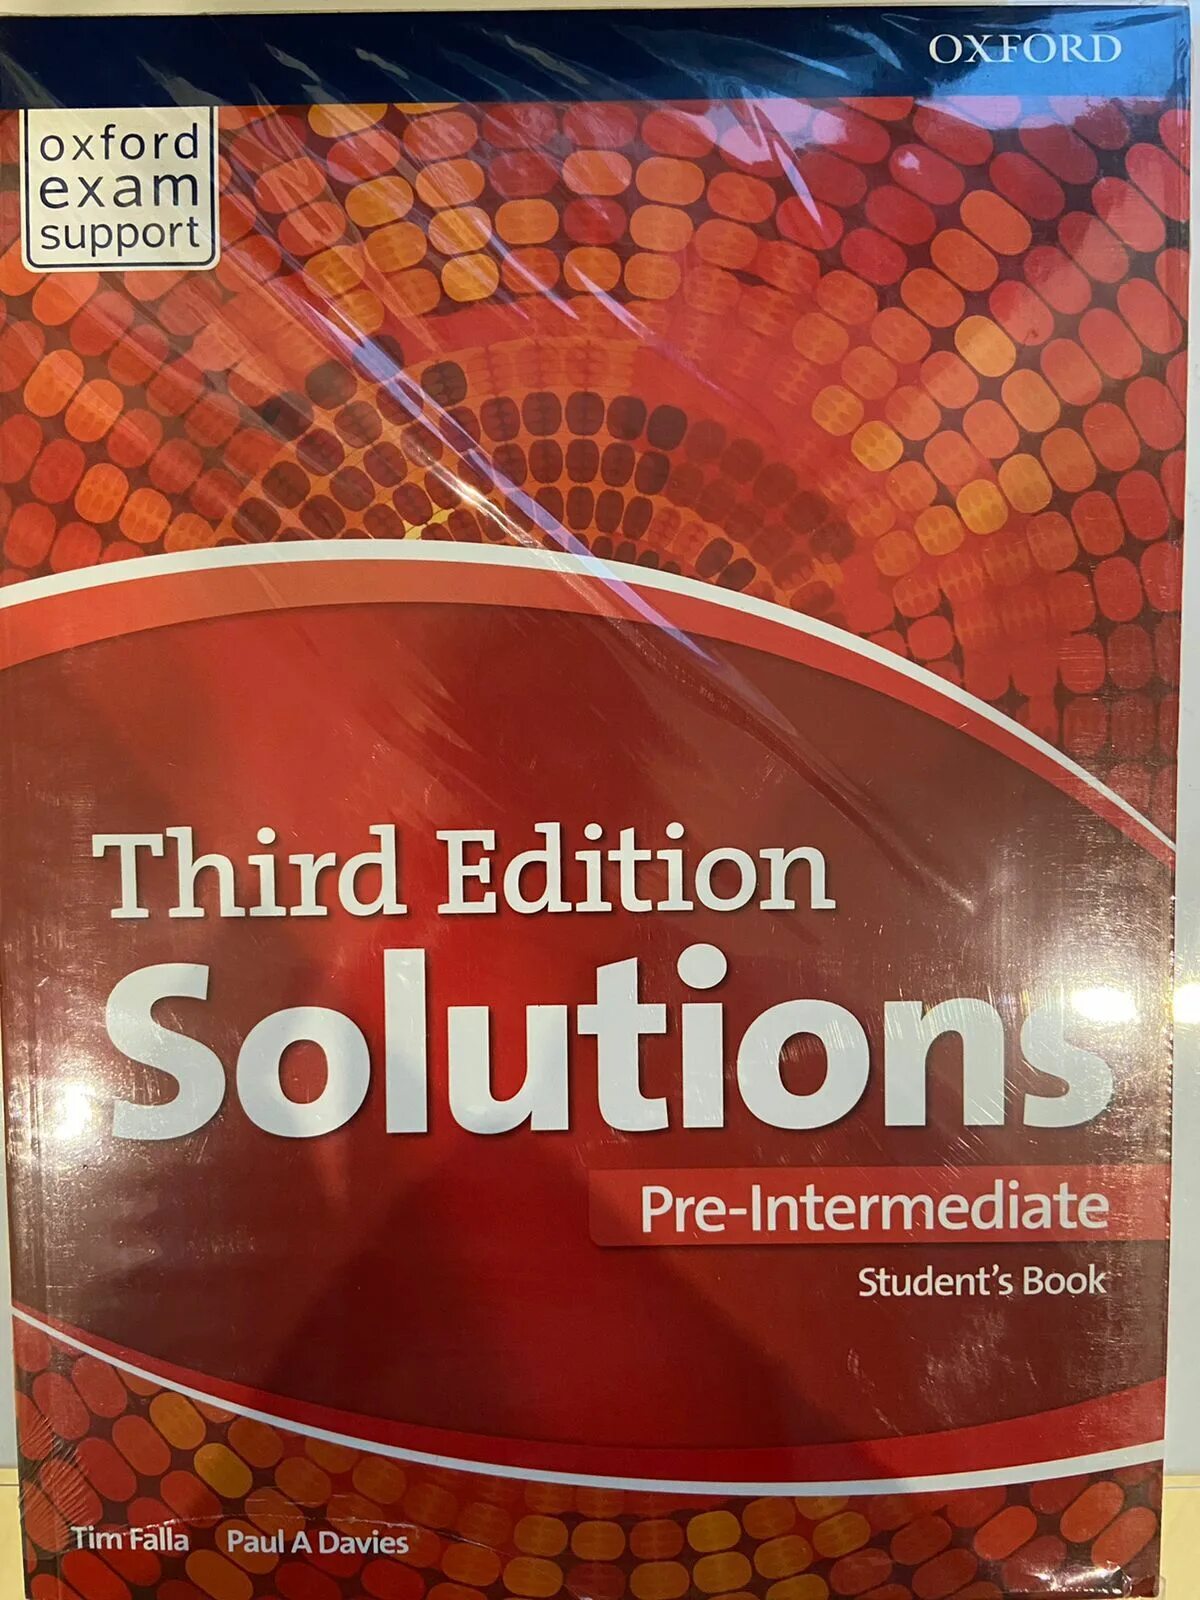 Солюшенс пре интермедиат 3 издание. Solutions pre-Intermediate 3 Edition. Third Edition solutions. Учебник third Edition solutions.